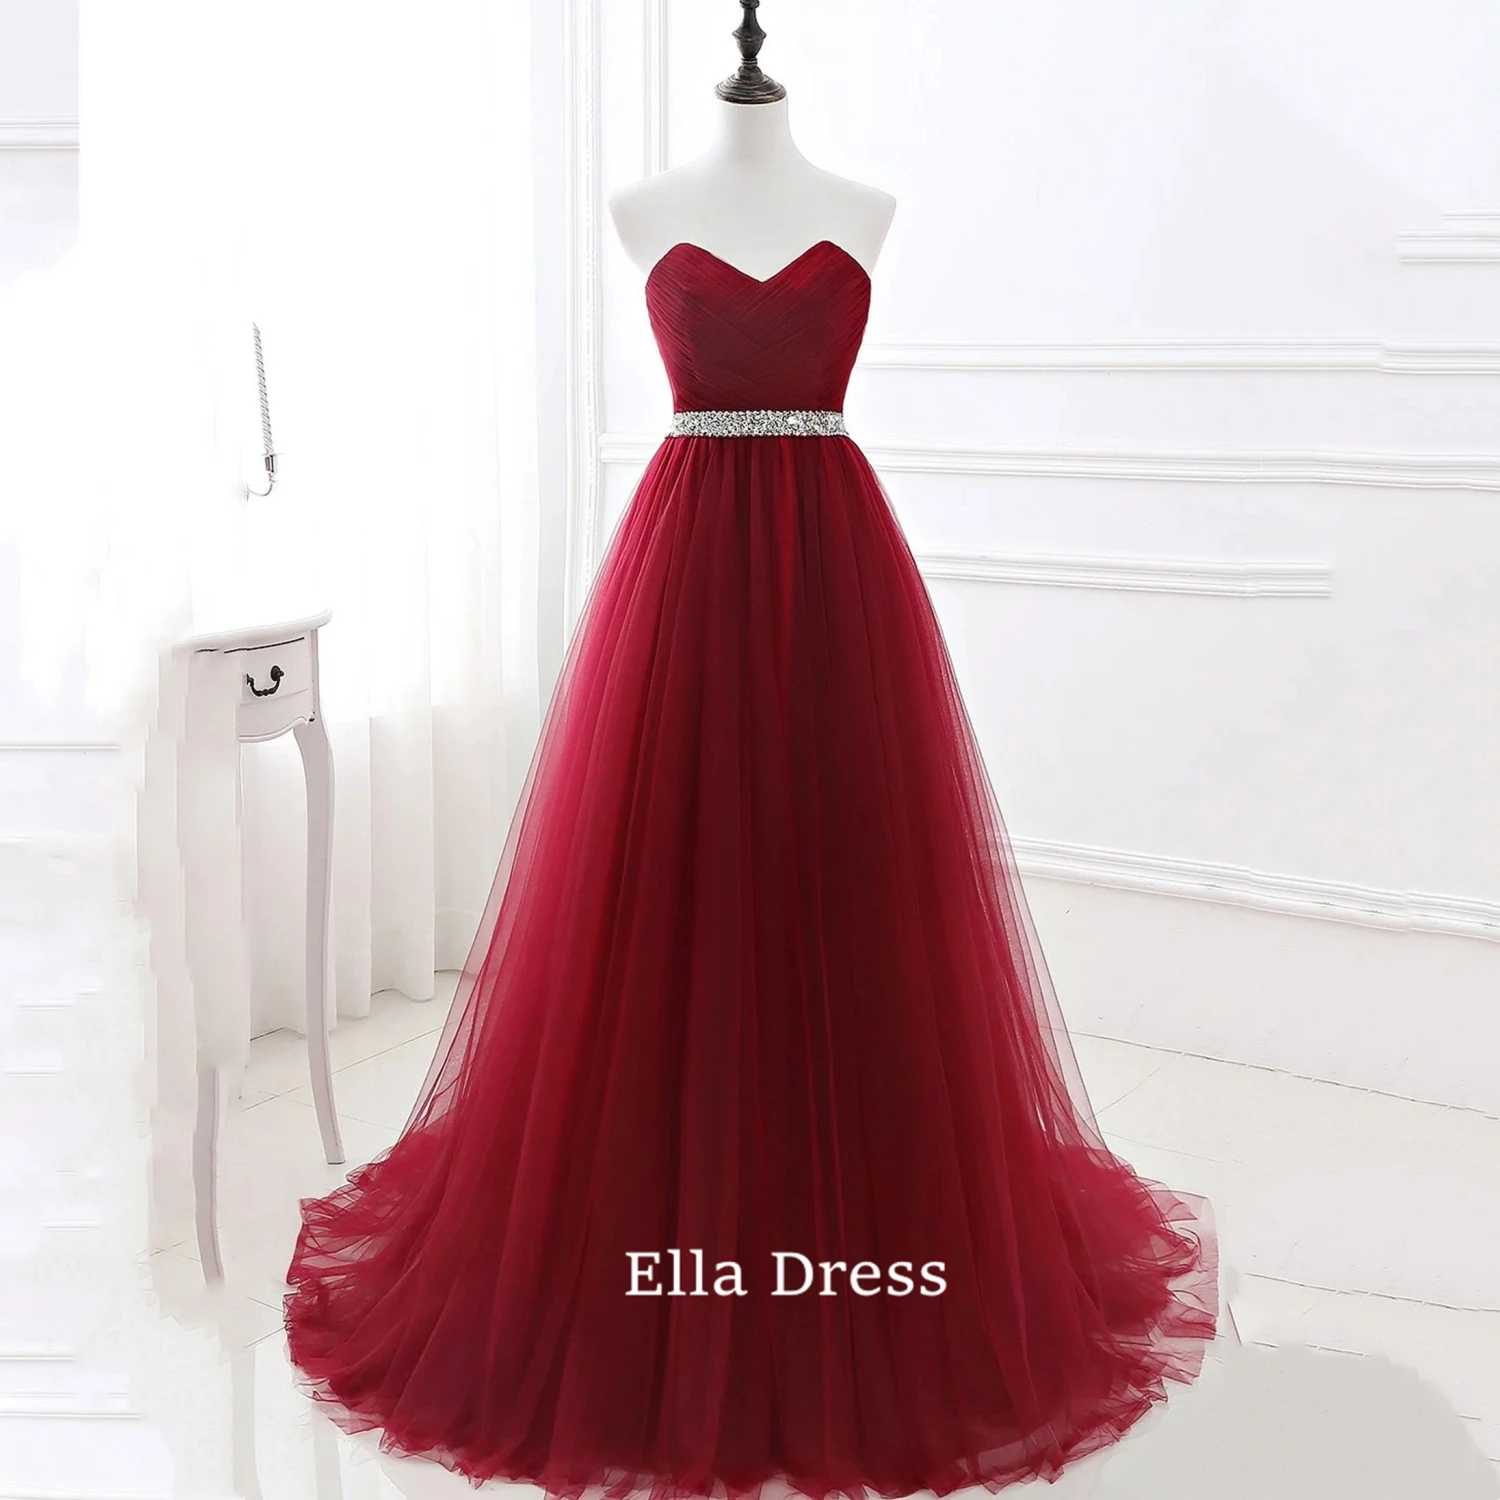 

Ella Simple Women's Burgundy Evening Dress Formal Tulle Dress Sweetheart Neckline Sequin Beaded Prom Graduation Party Dress Gown